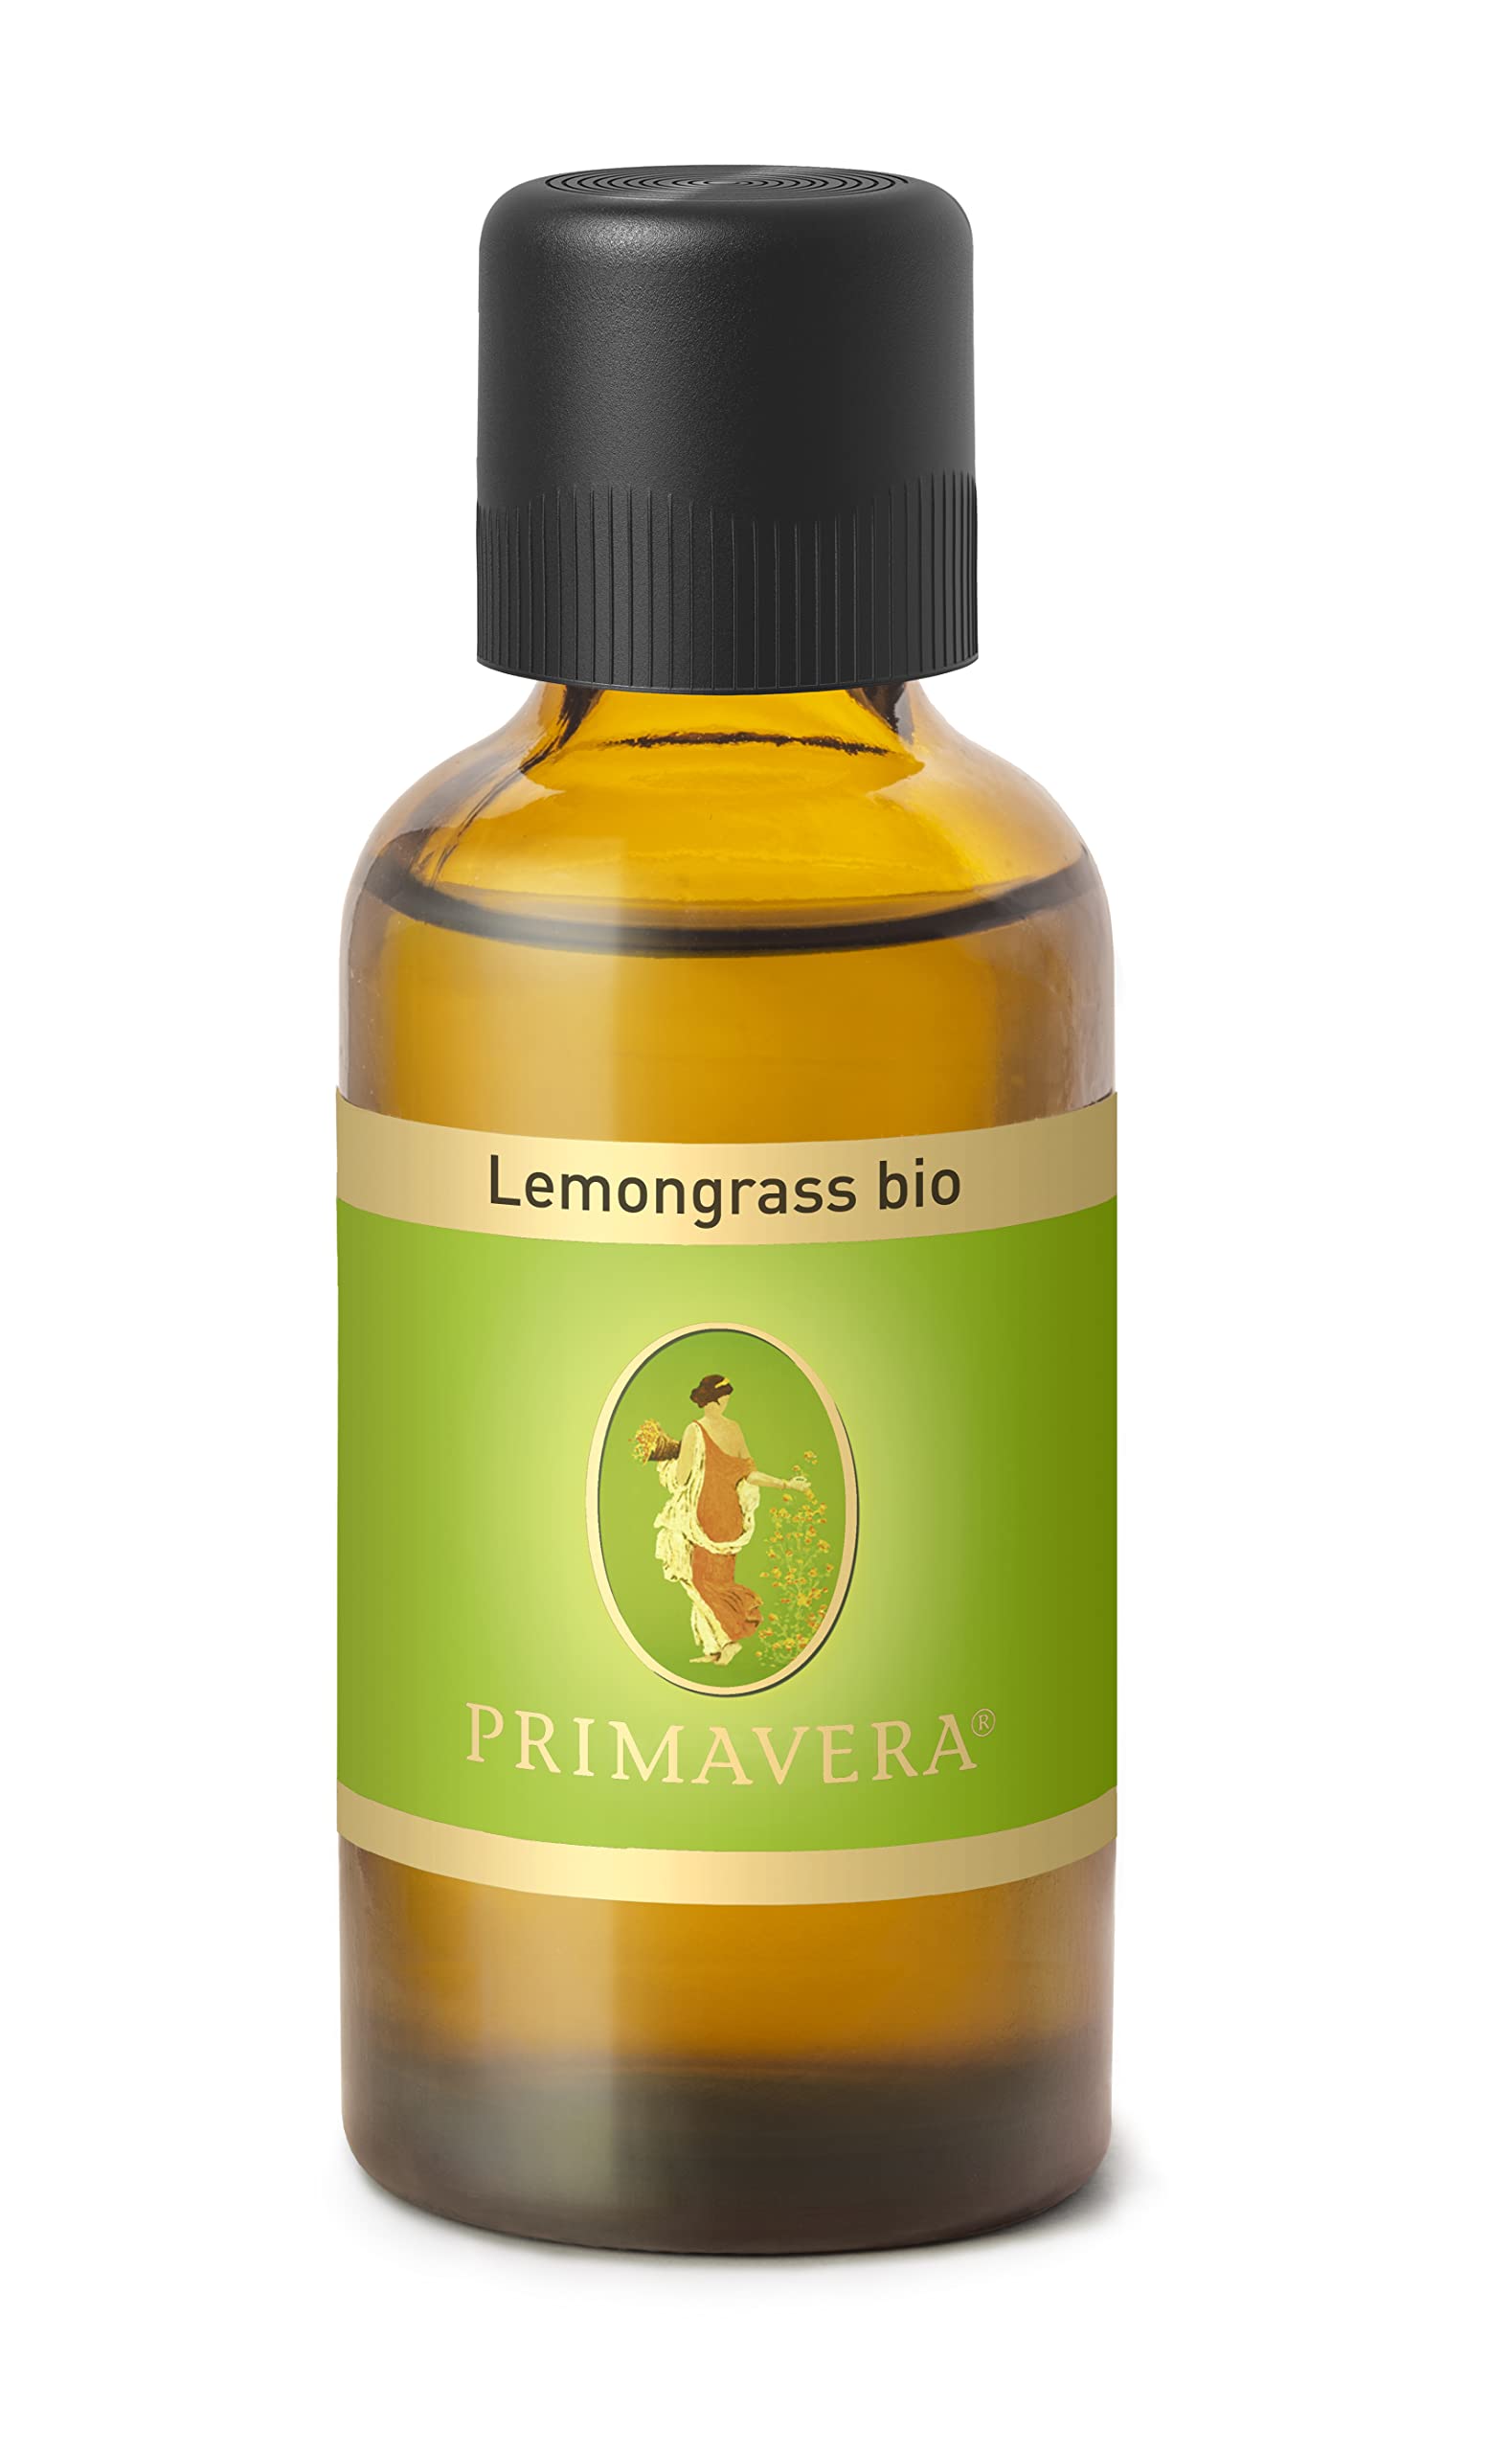 PRIMAVERA Ätherisches Öl Lemongrass bio 50 ml - Aromaöl, Duftöl, Aromatherapie - beruhigend, geistig anregend - vegan